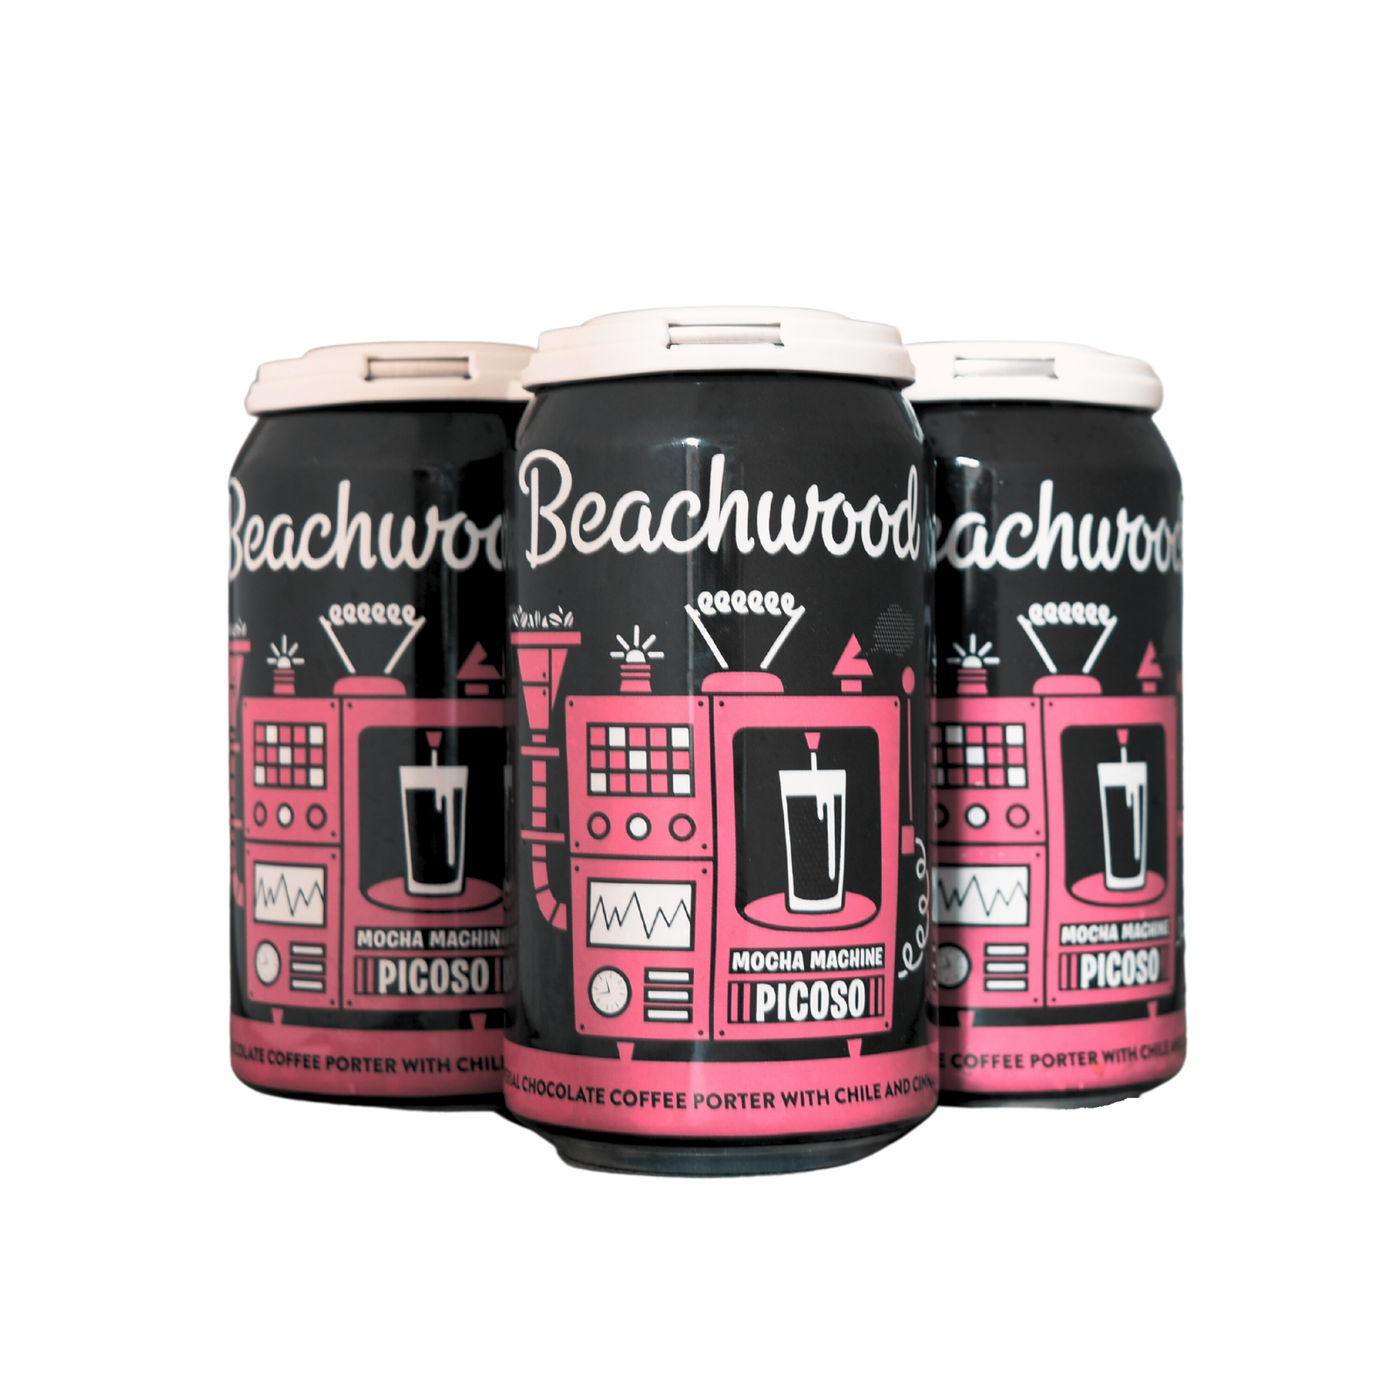 Beachwood Mocha Machine Picoso